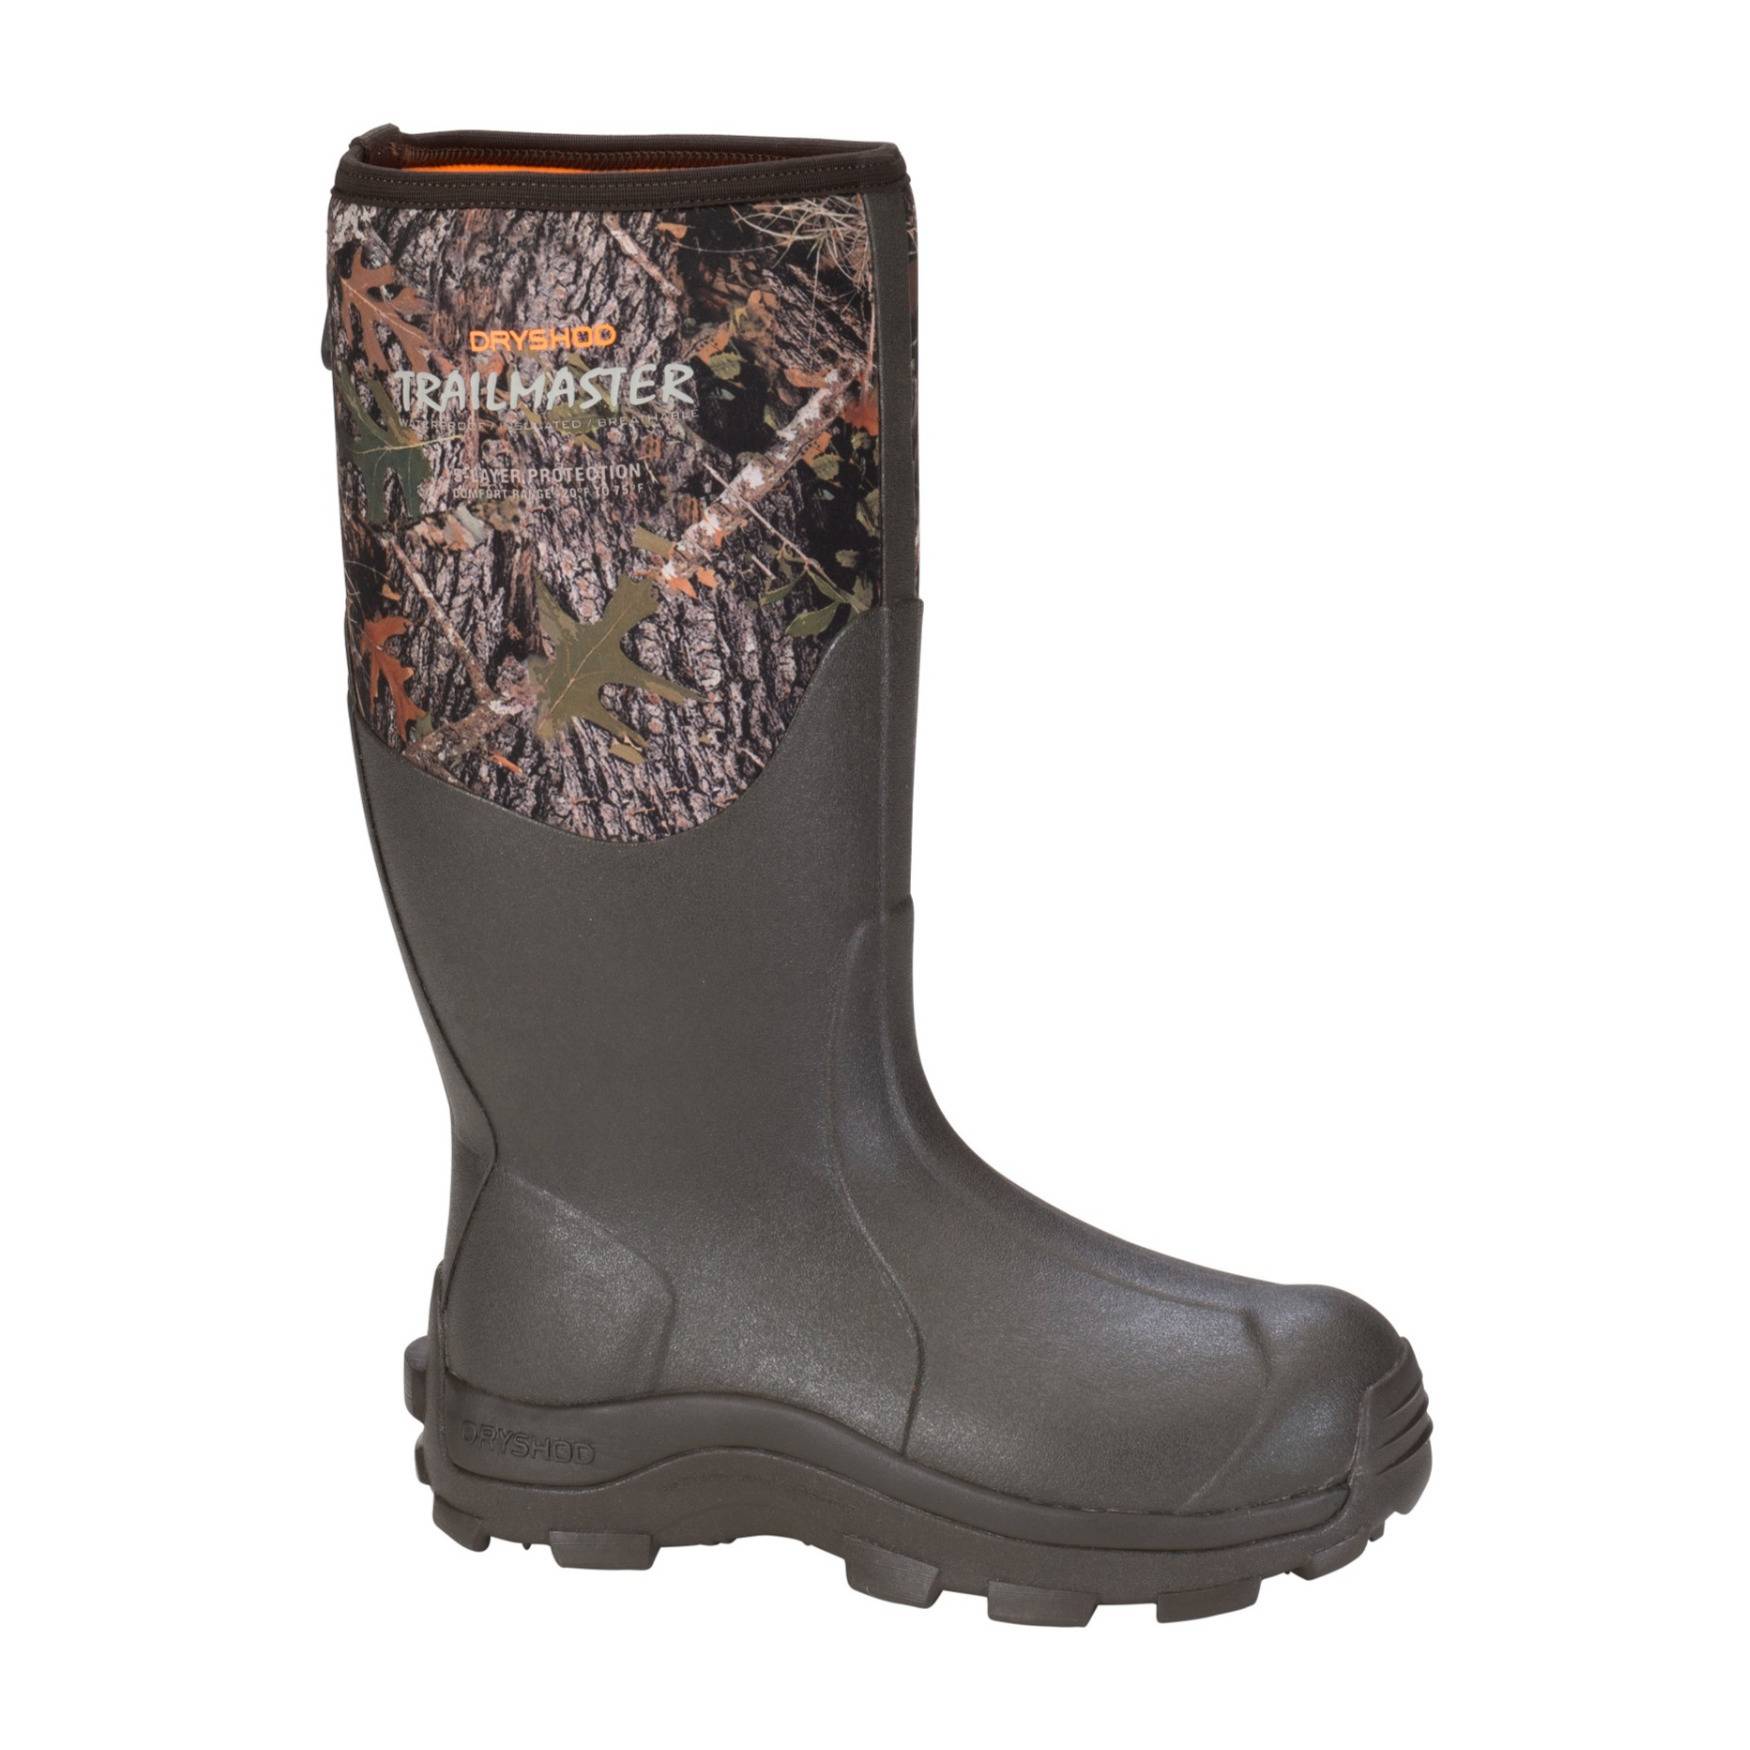 DryShod Trailmaster Men’s Hunting Boots (Size 11, Camo/Bark)